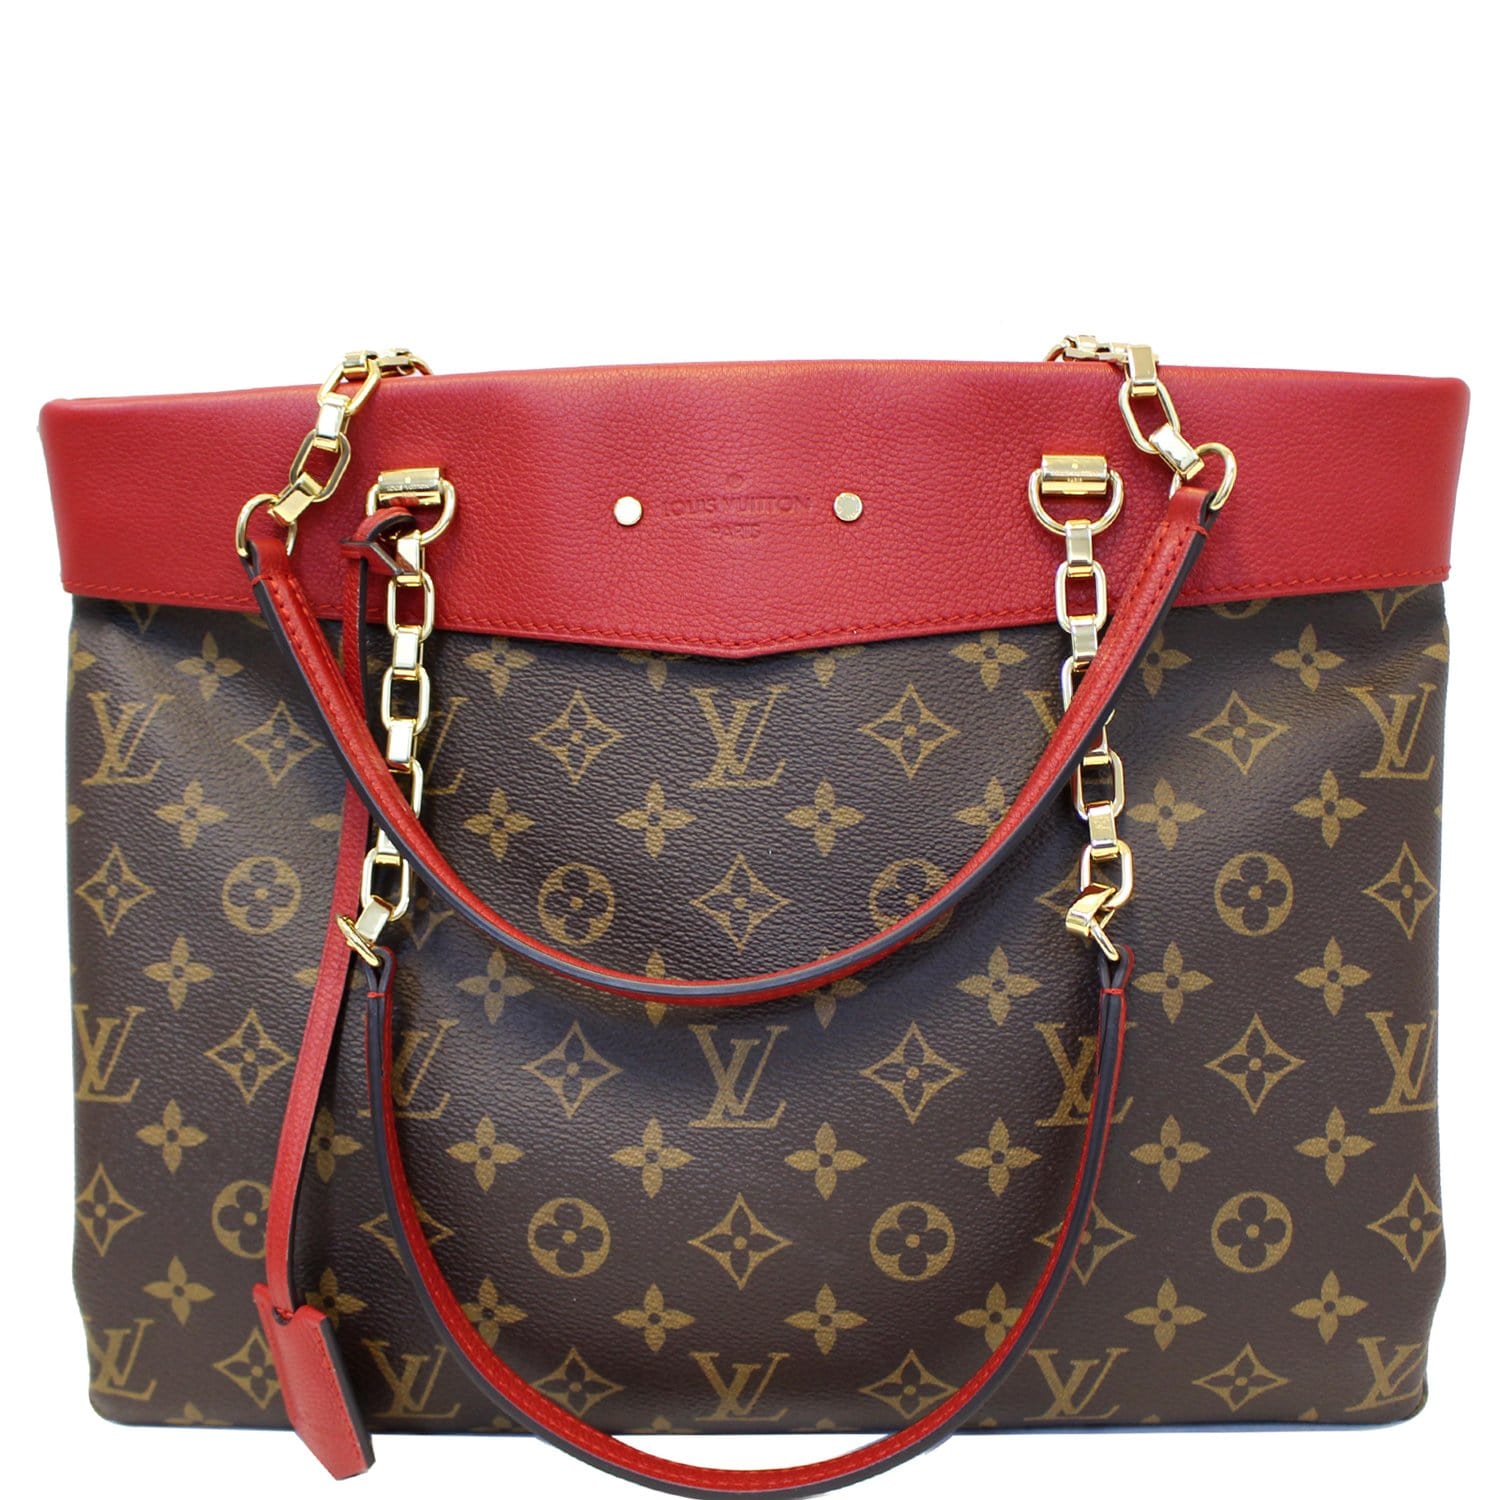 Louis Vuitton cherry bag  Bags, Louis vuitton bag, Purses and